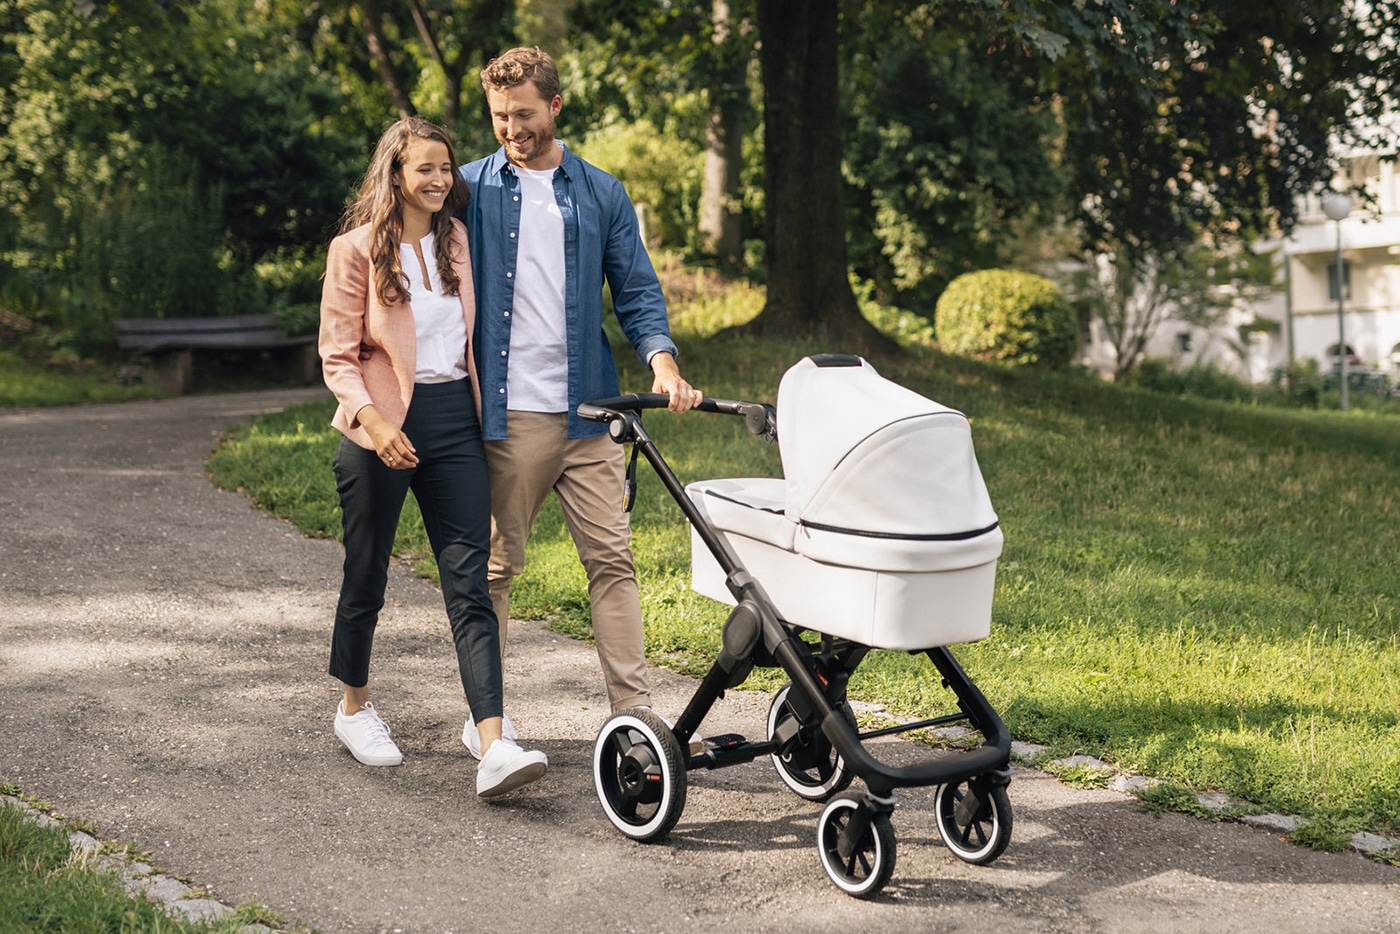 Bosch e-stroller system revolutionizes comfort and safety. Image Credit: Bosch